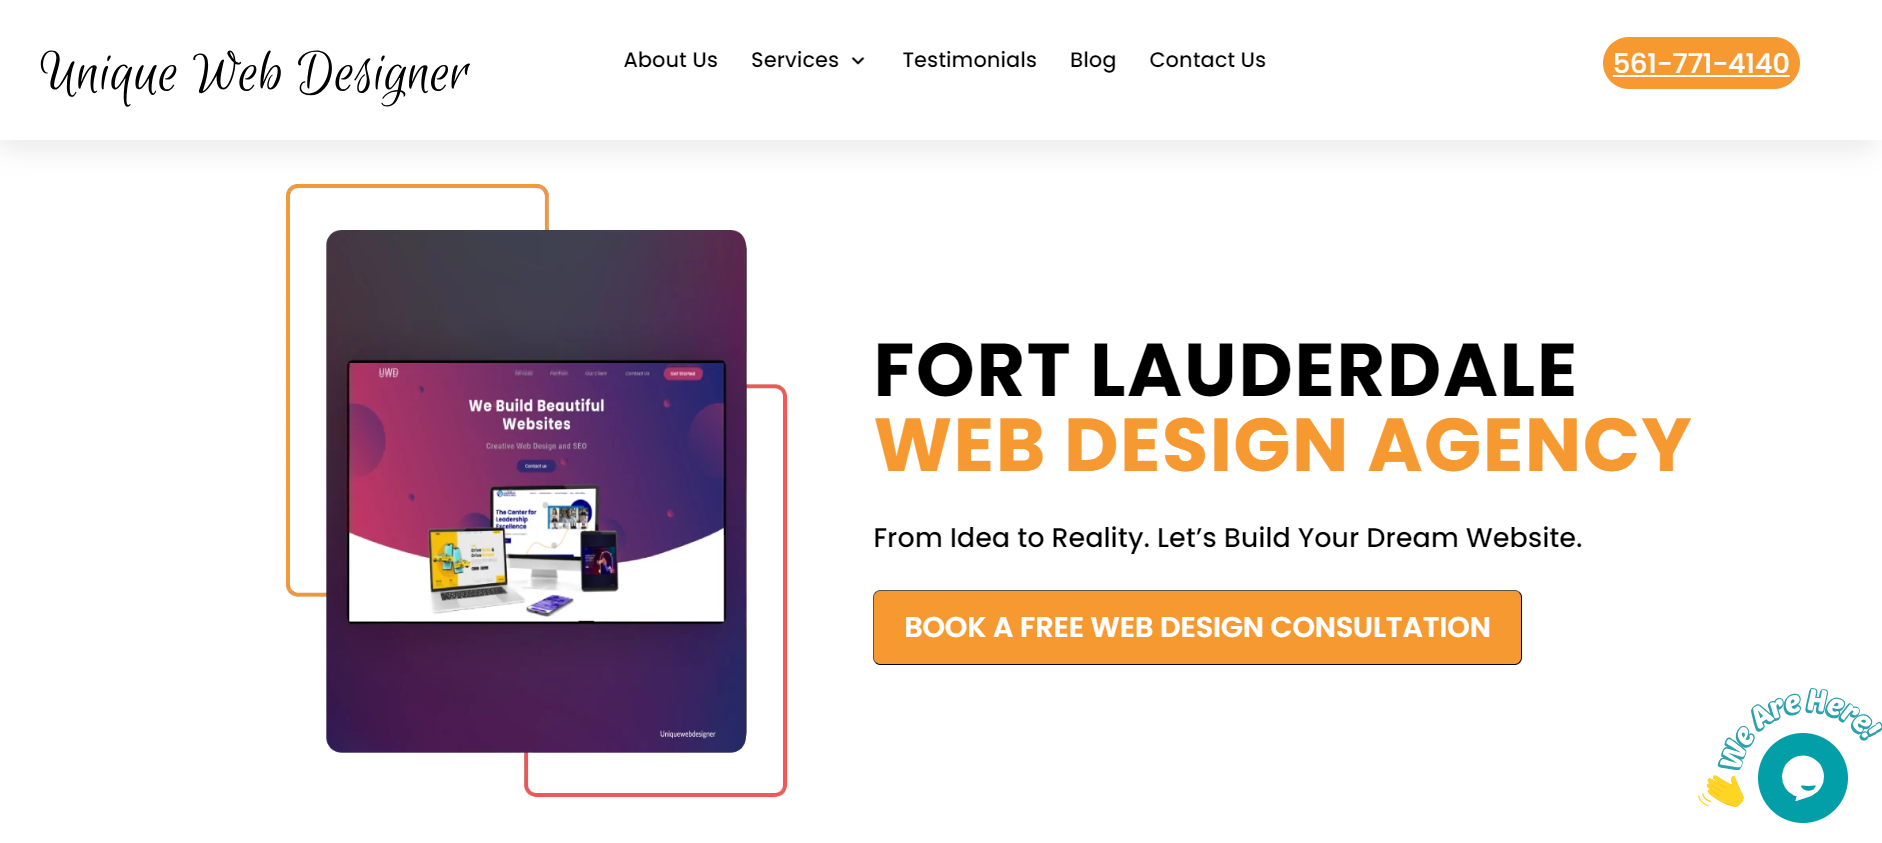 unique web designer home page for startups